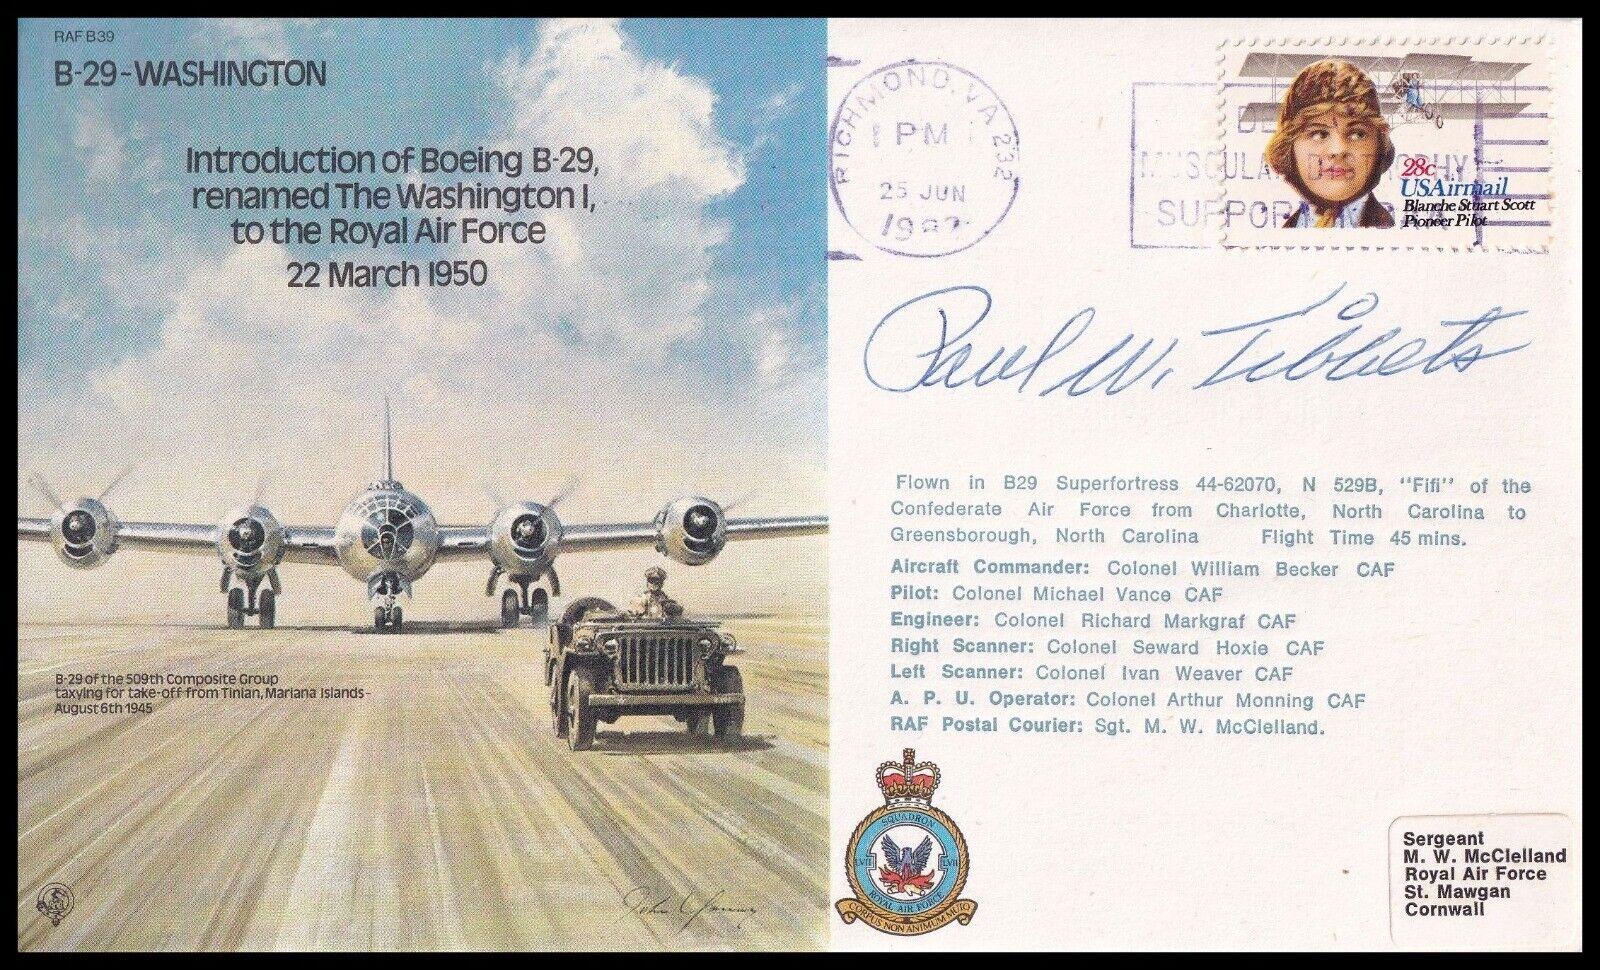 Enola Gay Captain Brig.Gen PAUL TIBBETS Signed RAF B39c B-29 Washington Cover